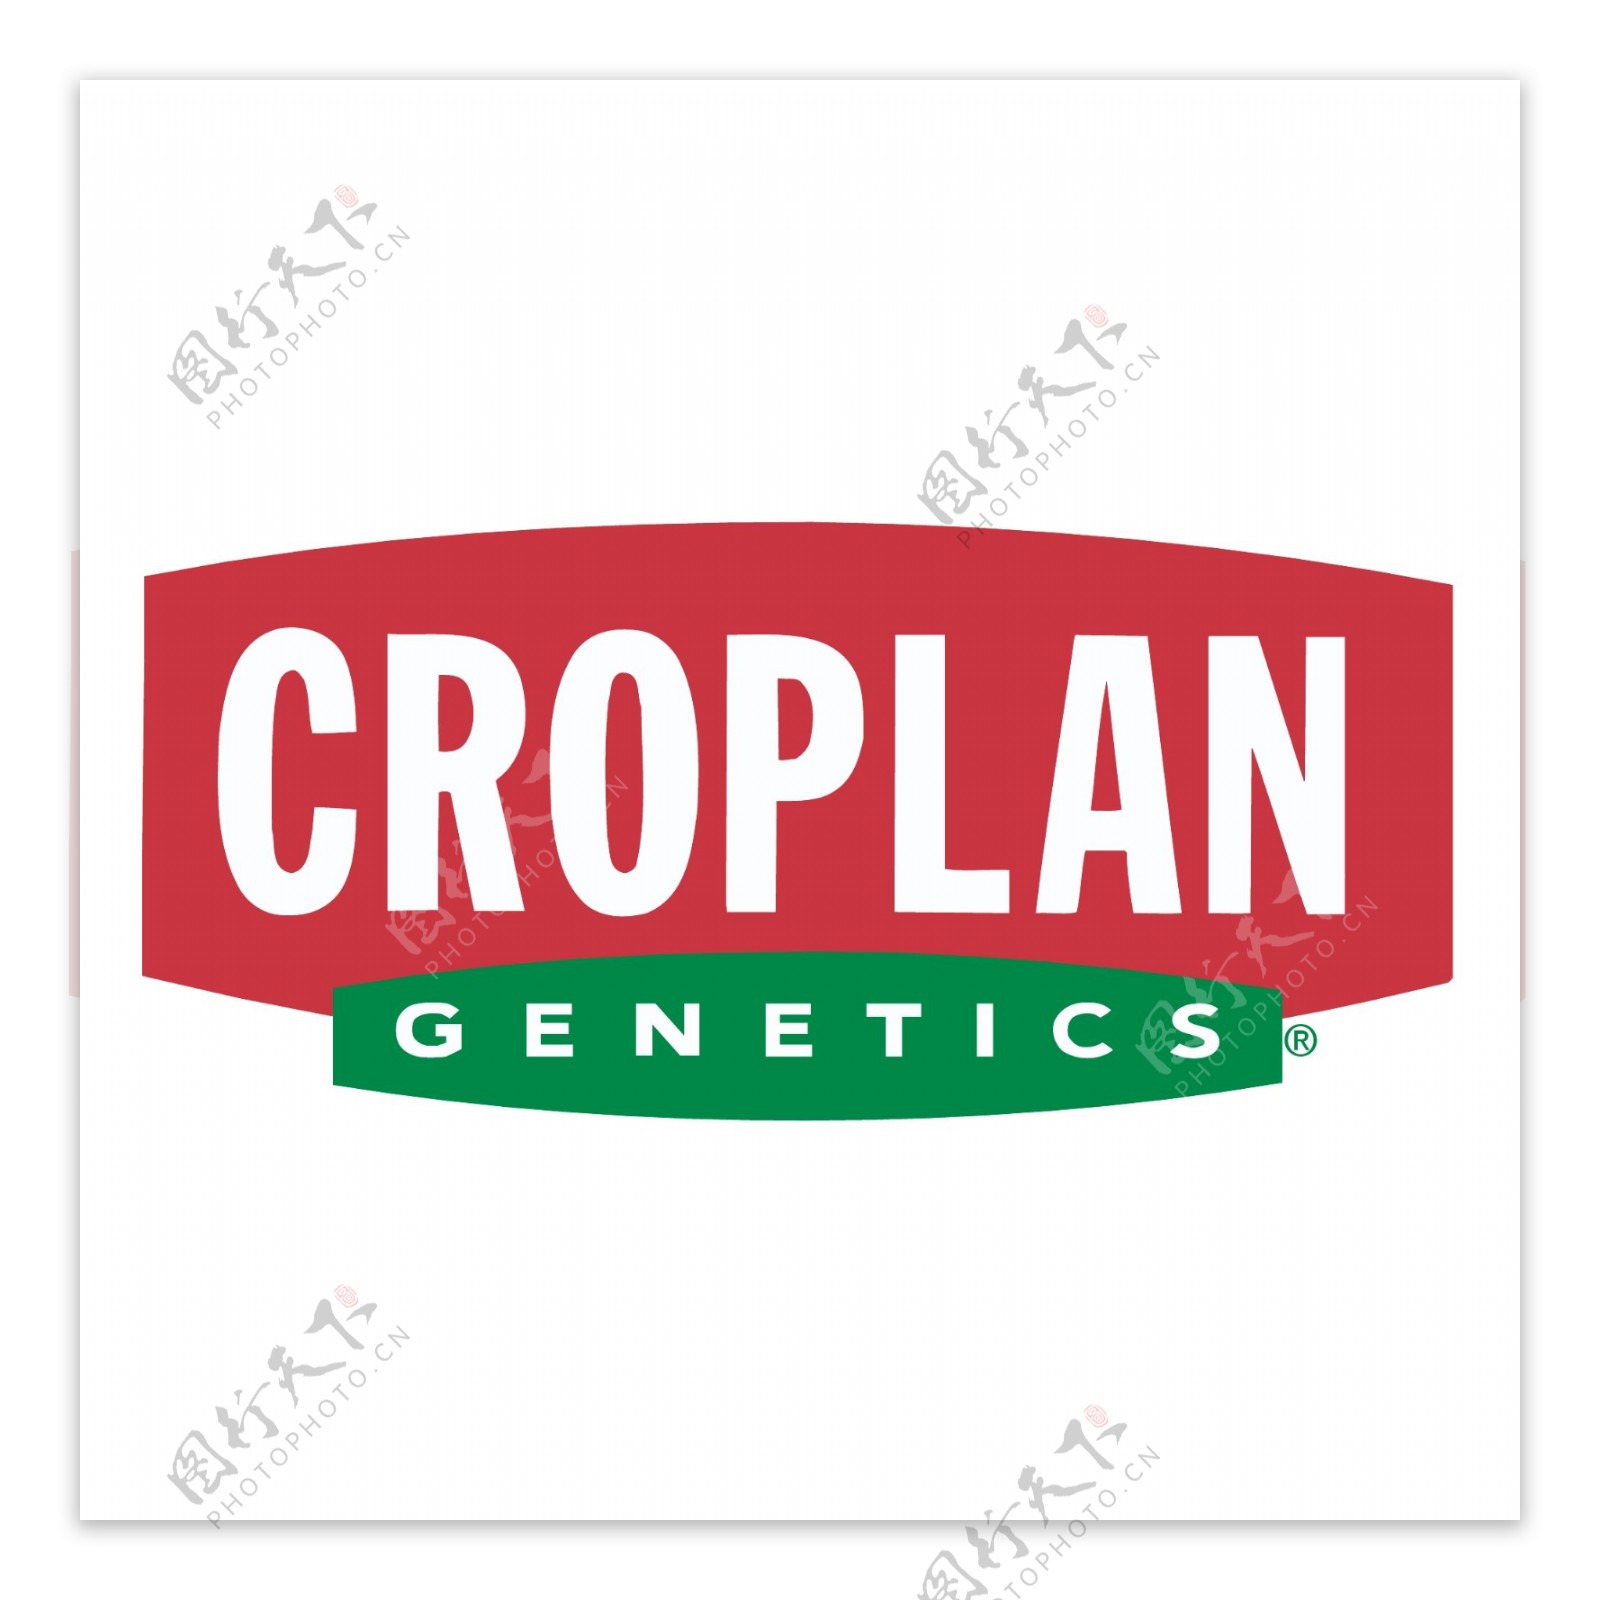 croplan遗传学